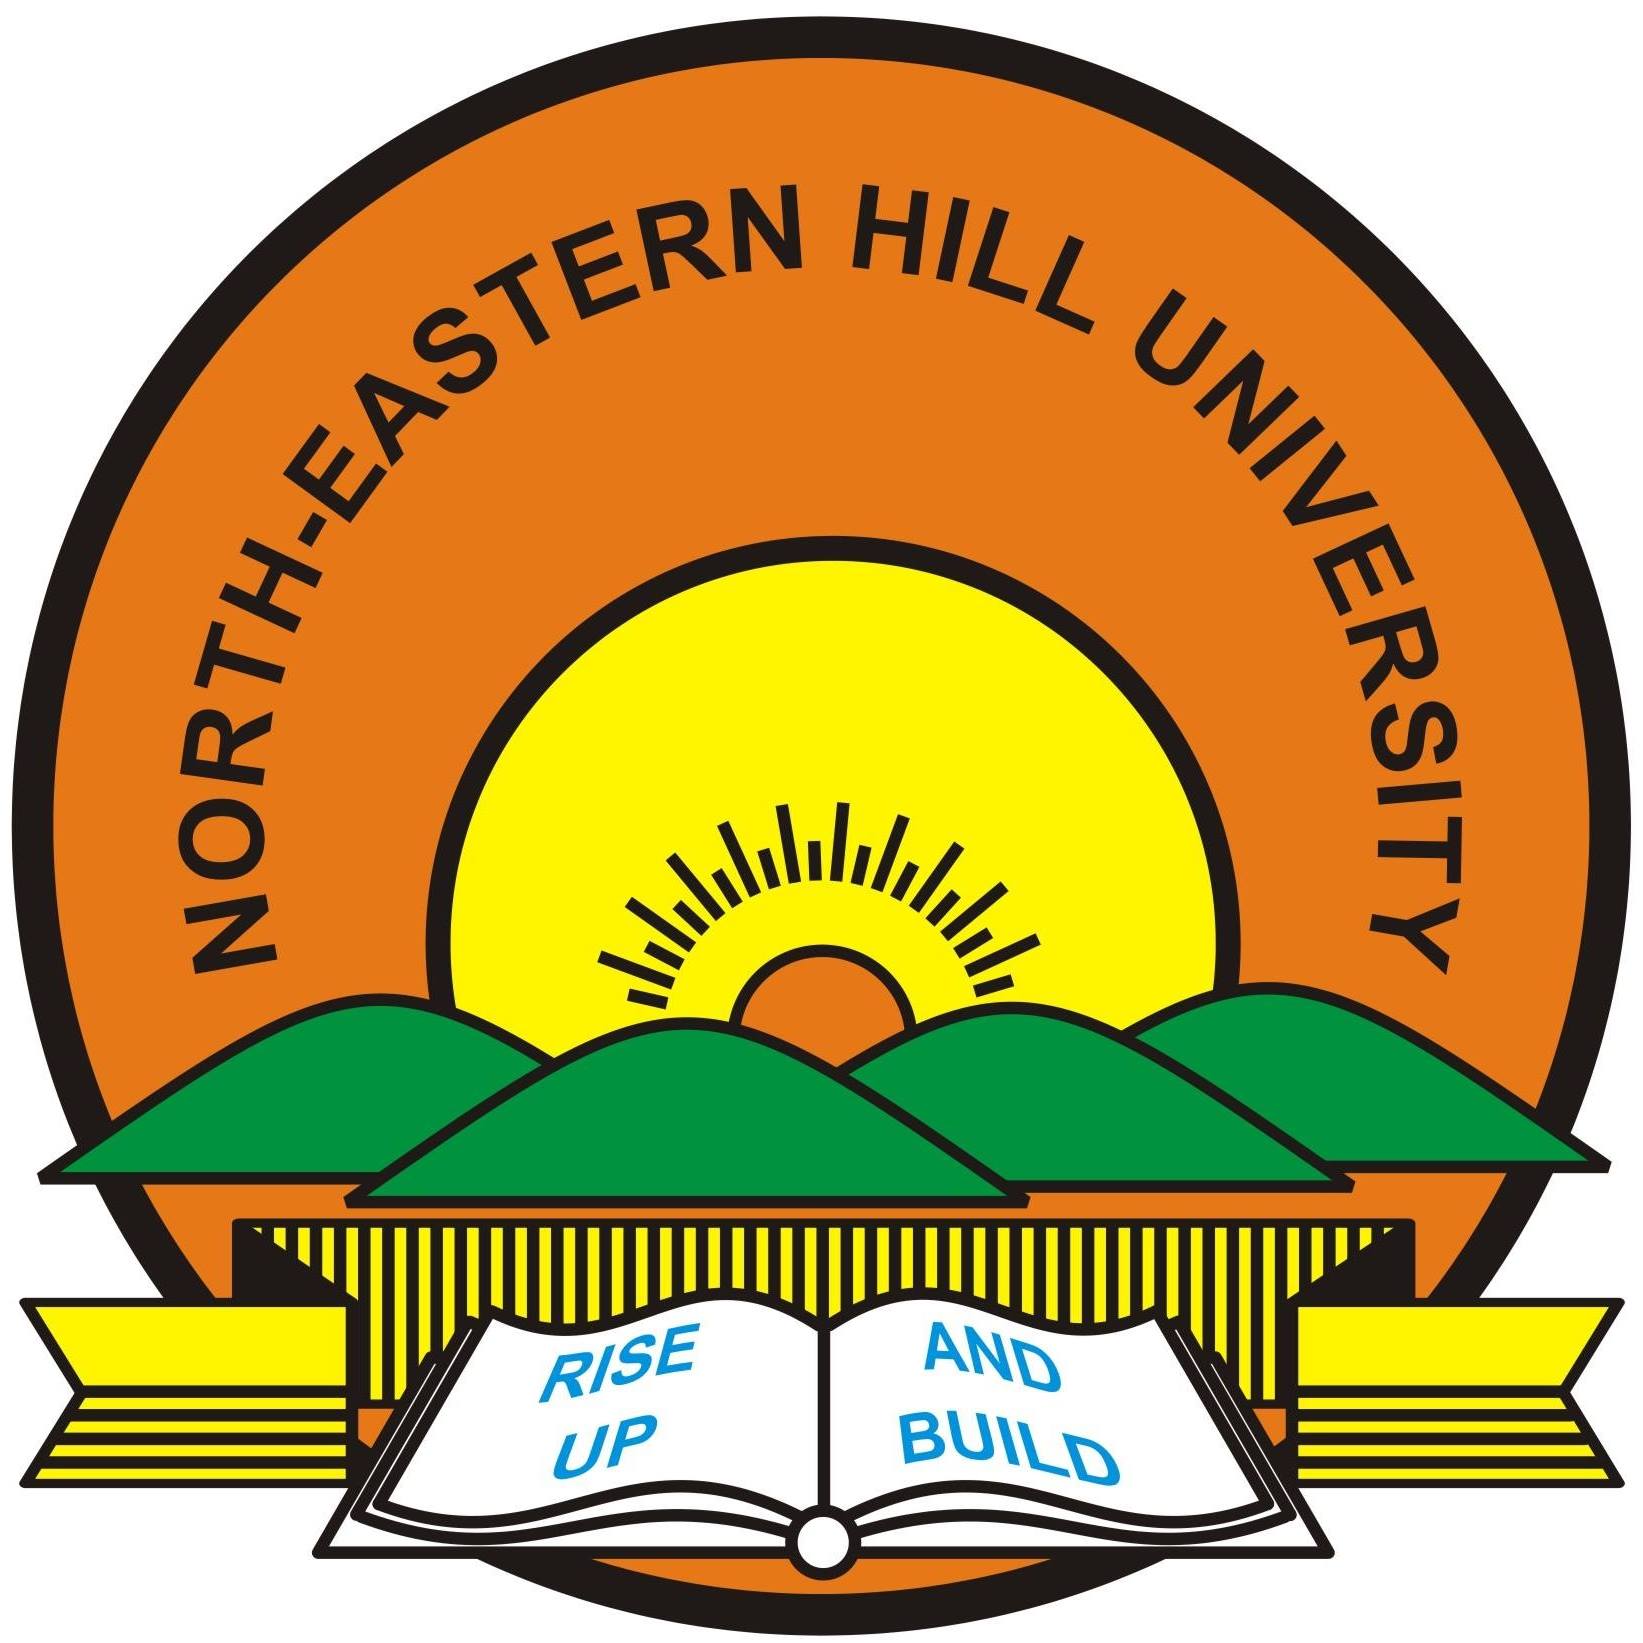 North-Eastern Hill ( NEHU University )